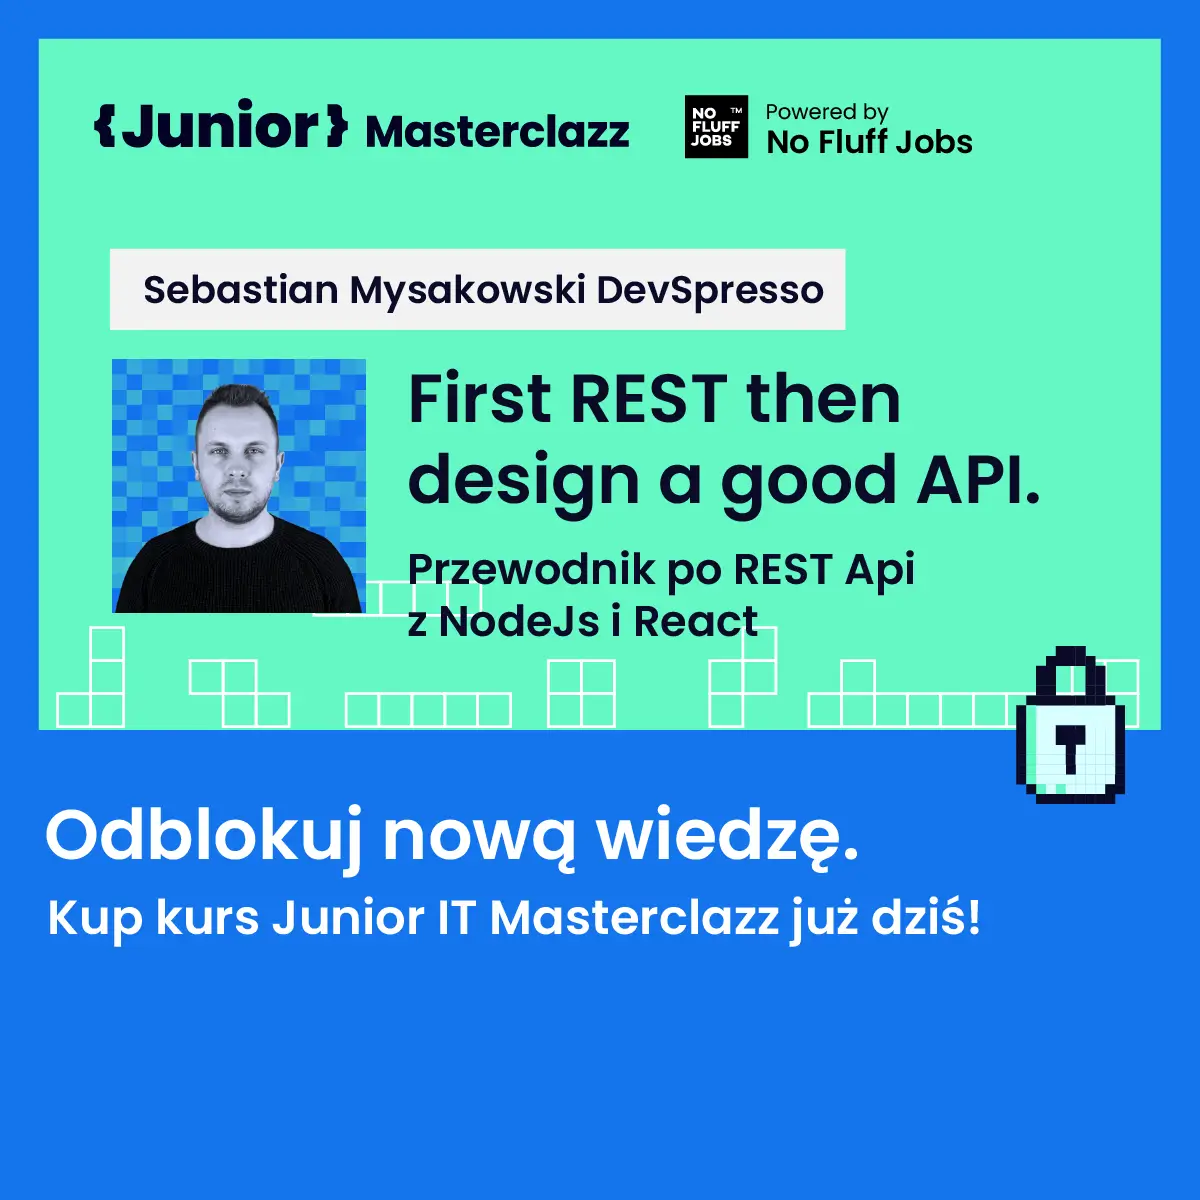 Logo for Junior IT Masterclazz